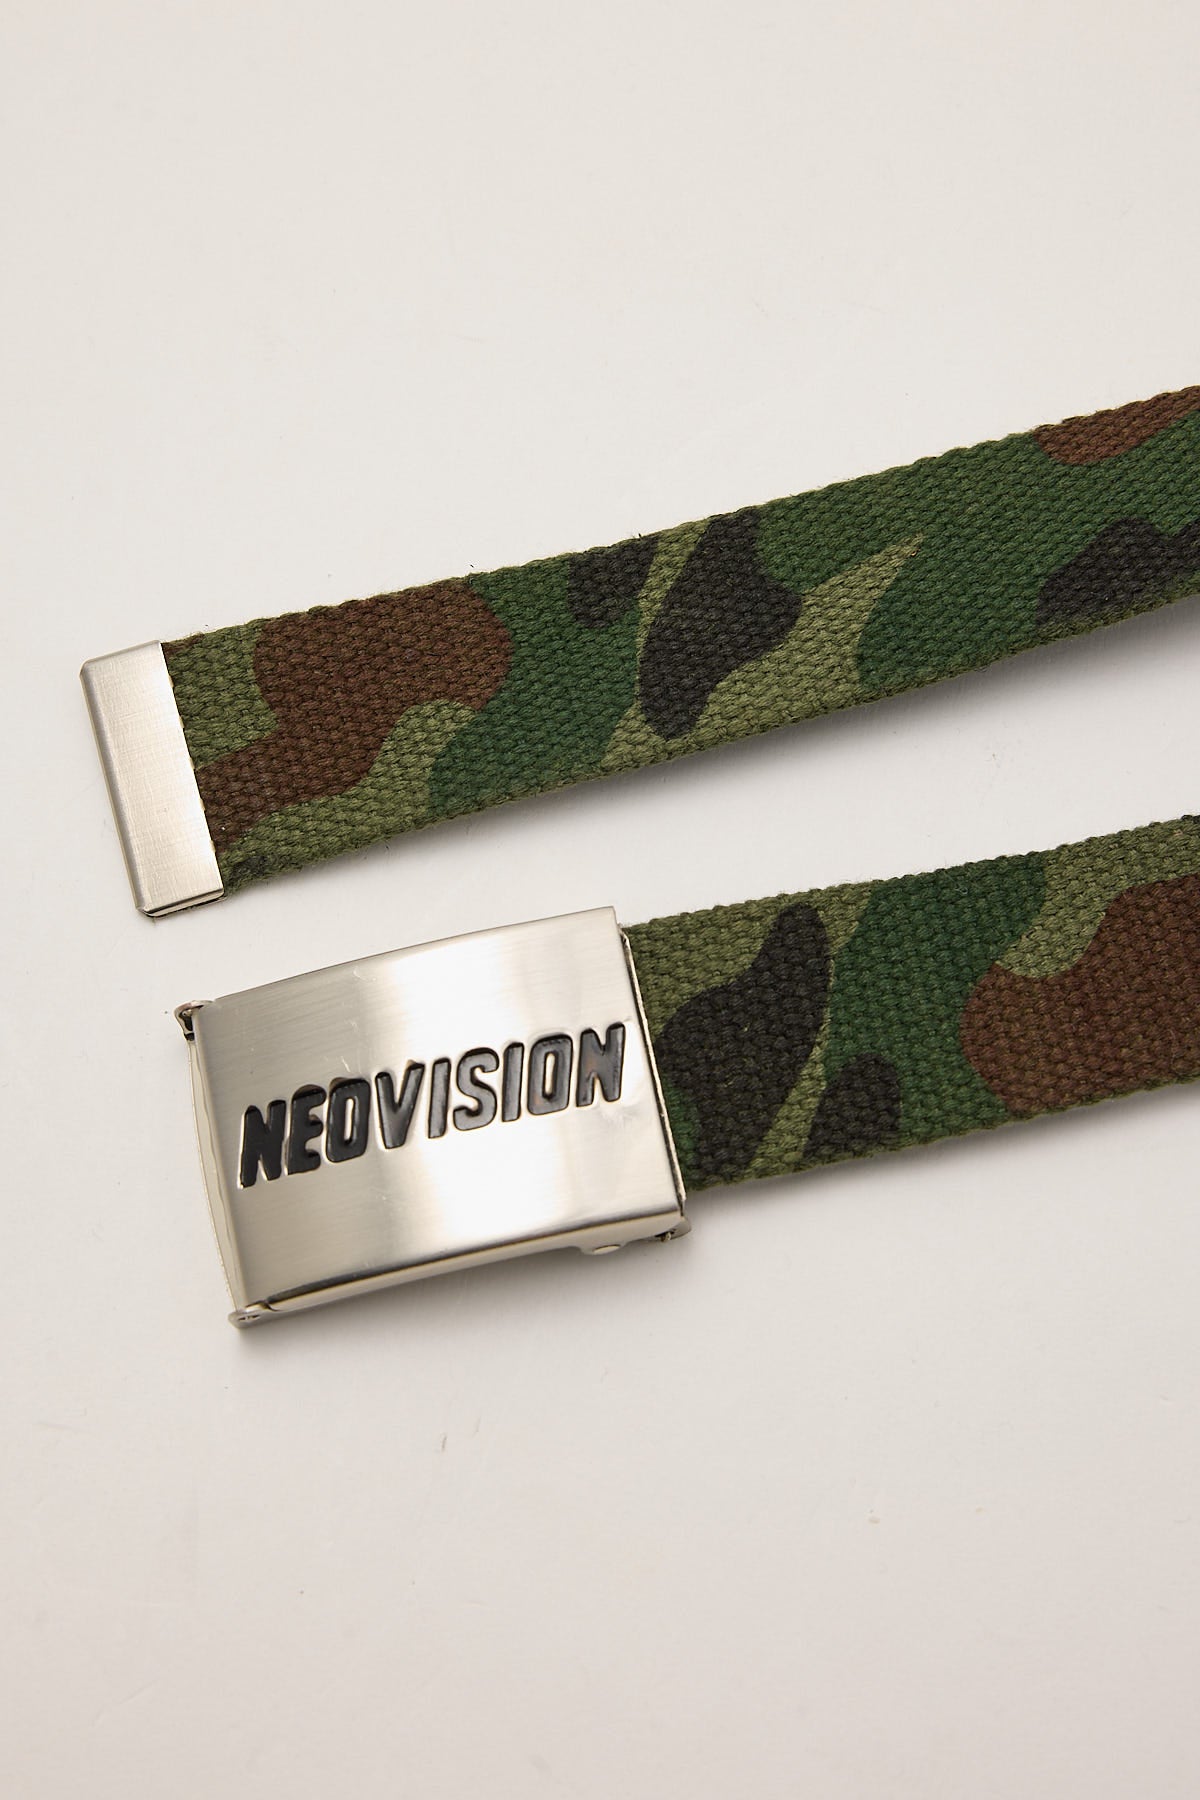 Neovision Clash Camo Web Belt Camo